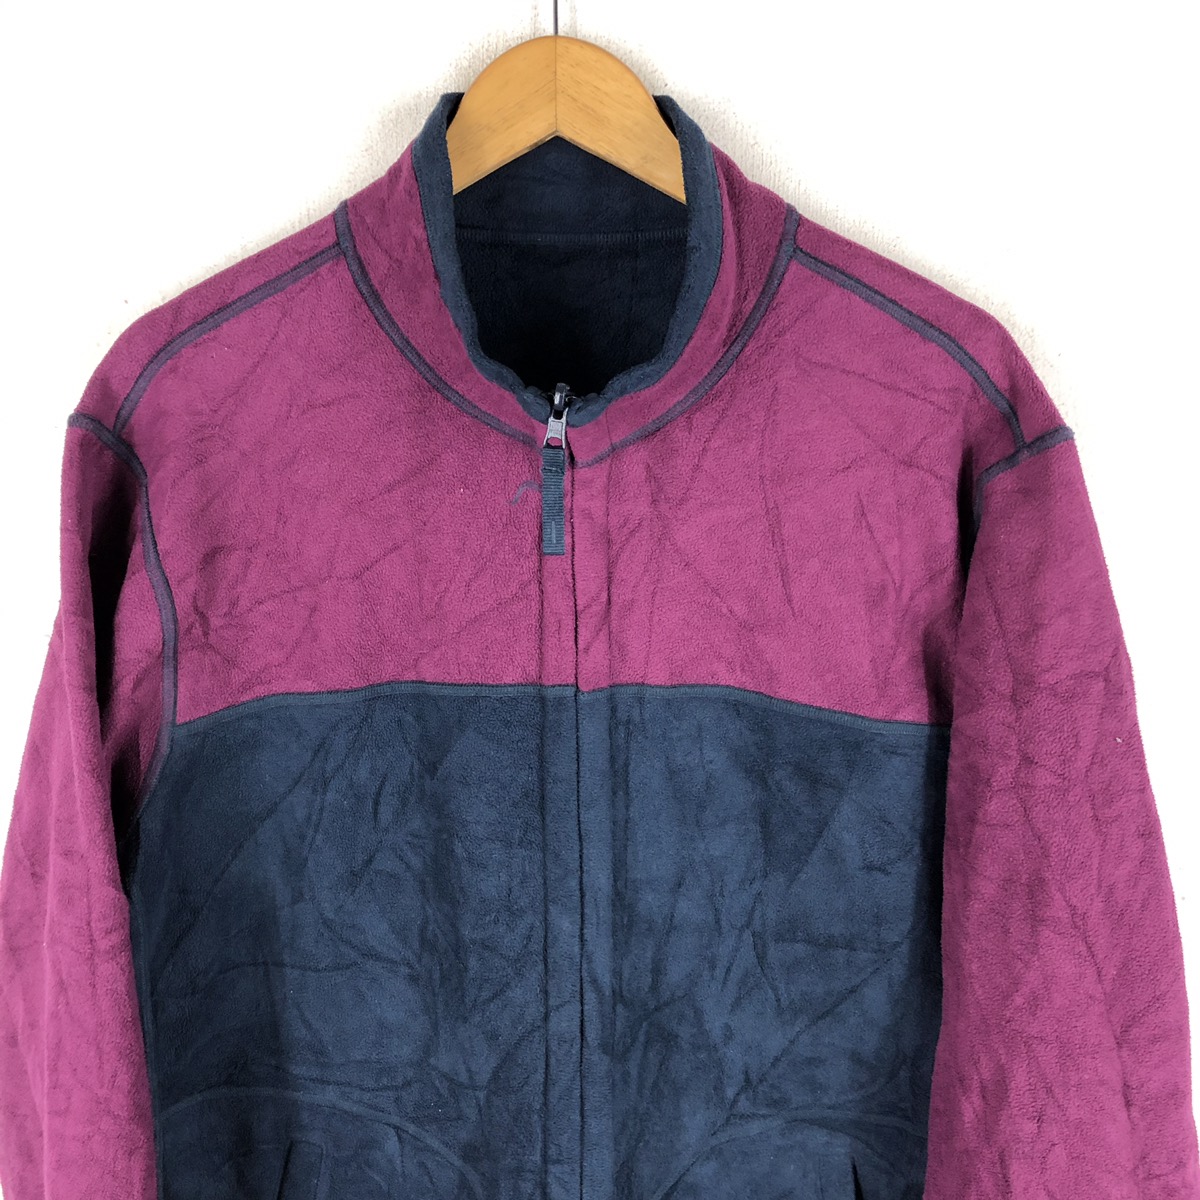 Uniqlo - Two tone color uniqlo fleece jacket - 2